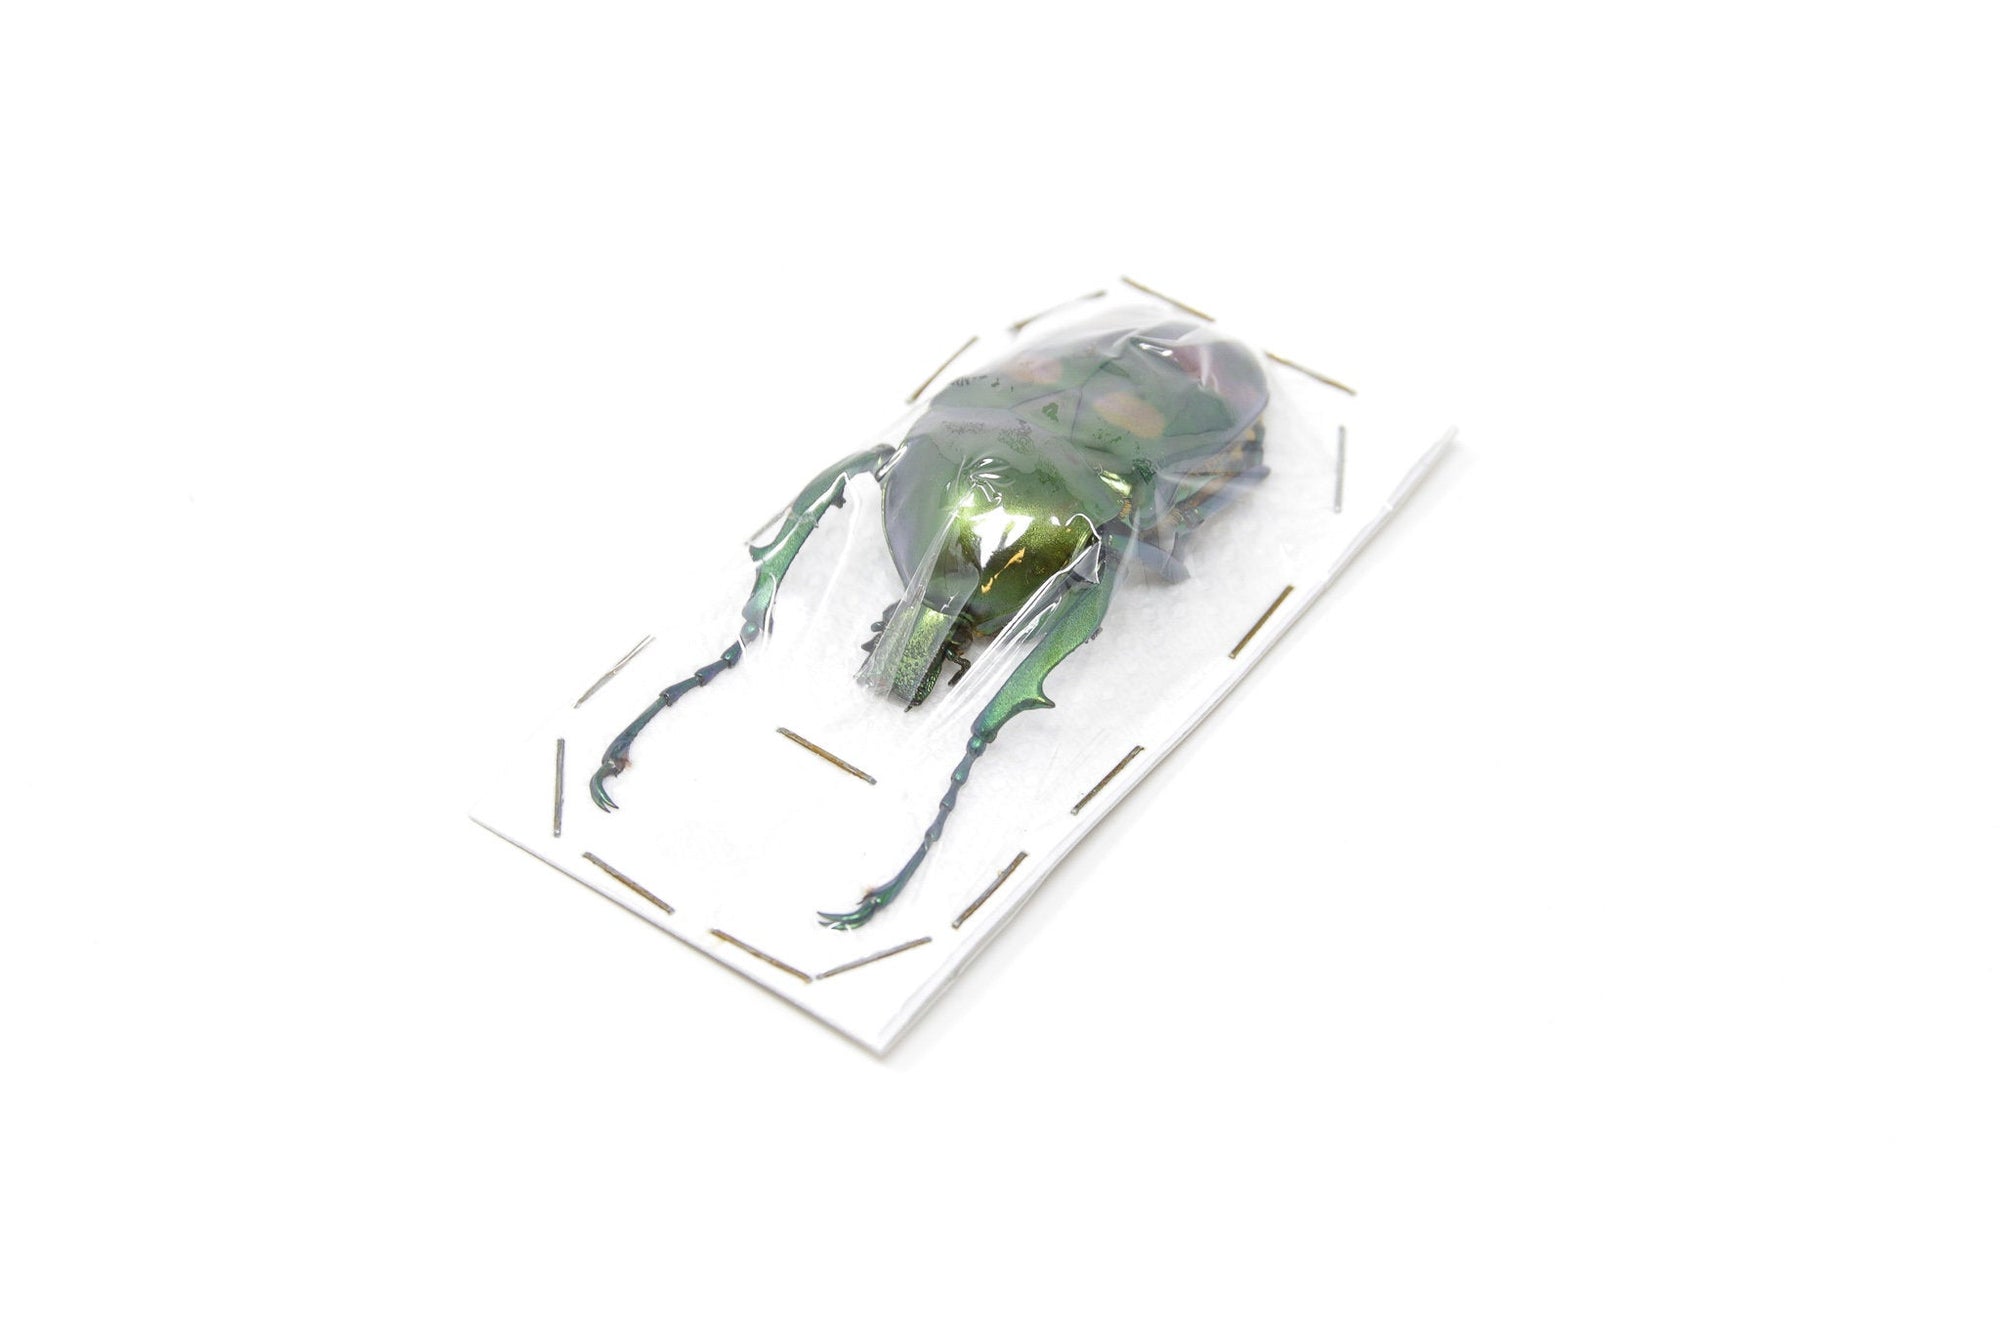 Jumnos ruckeri ruckeri 46.5mm A1 | Thailand Flower Beetle, Entomology Specimen